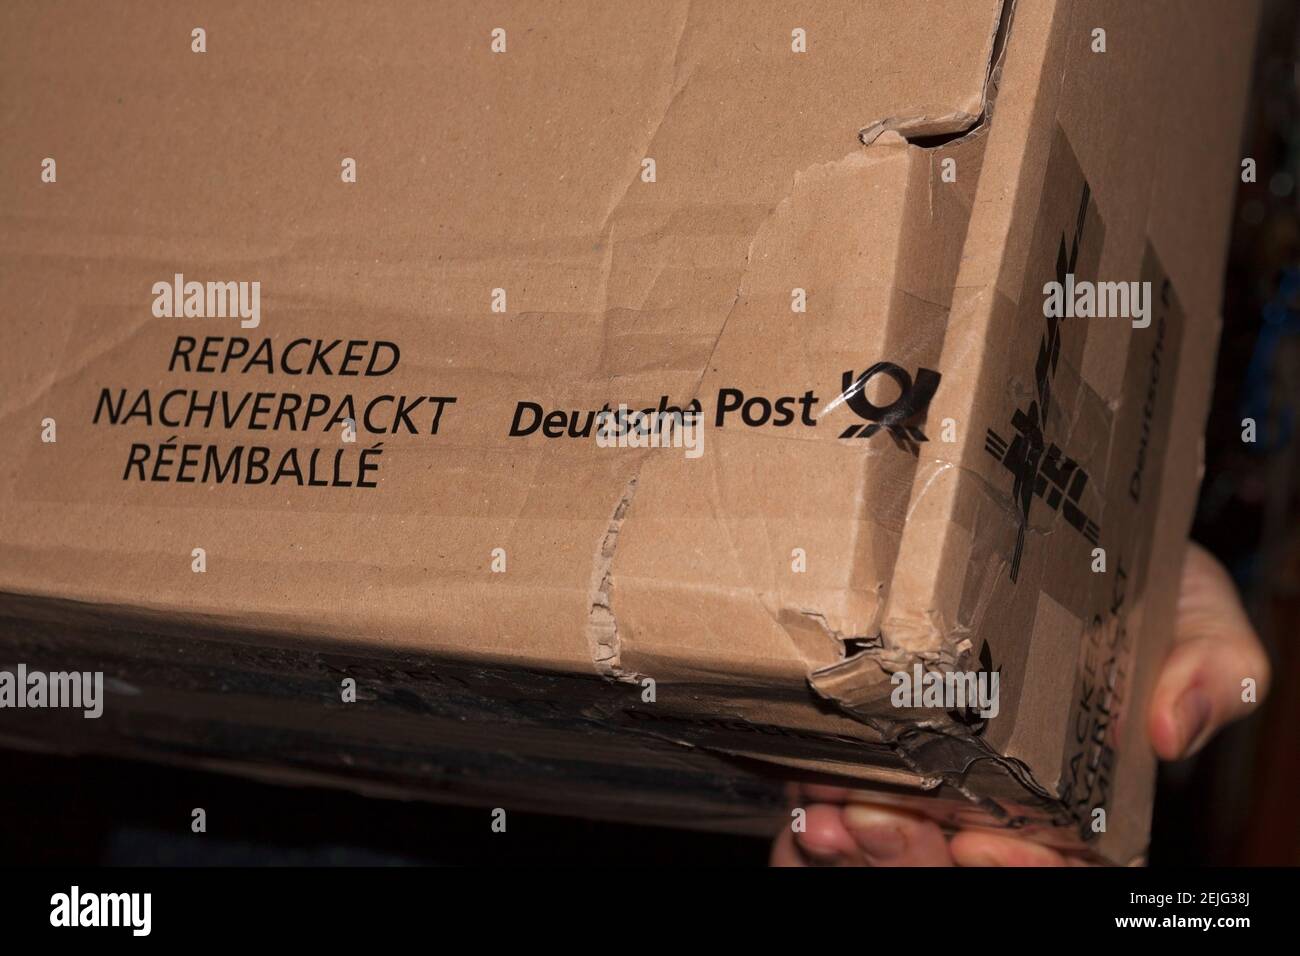 Paquete de correos reempaquetado de DHL Fotografía de stock - Alamy